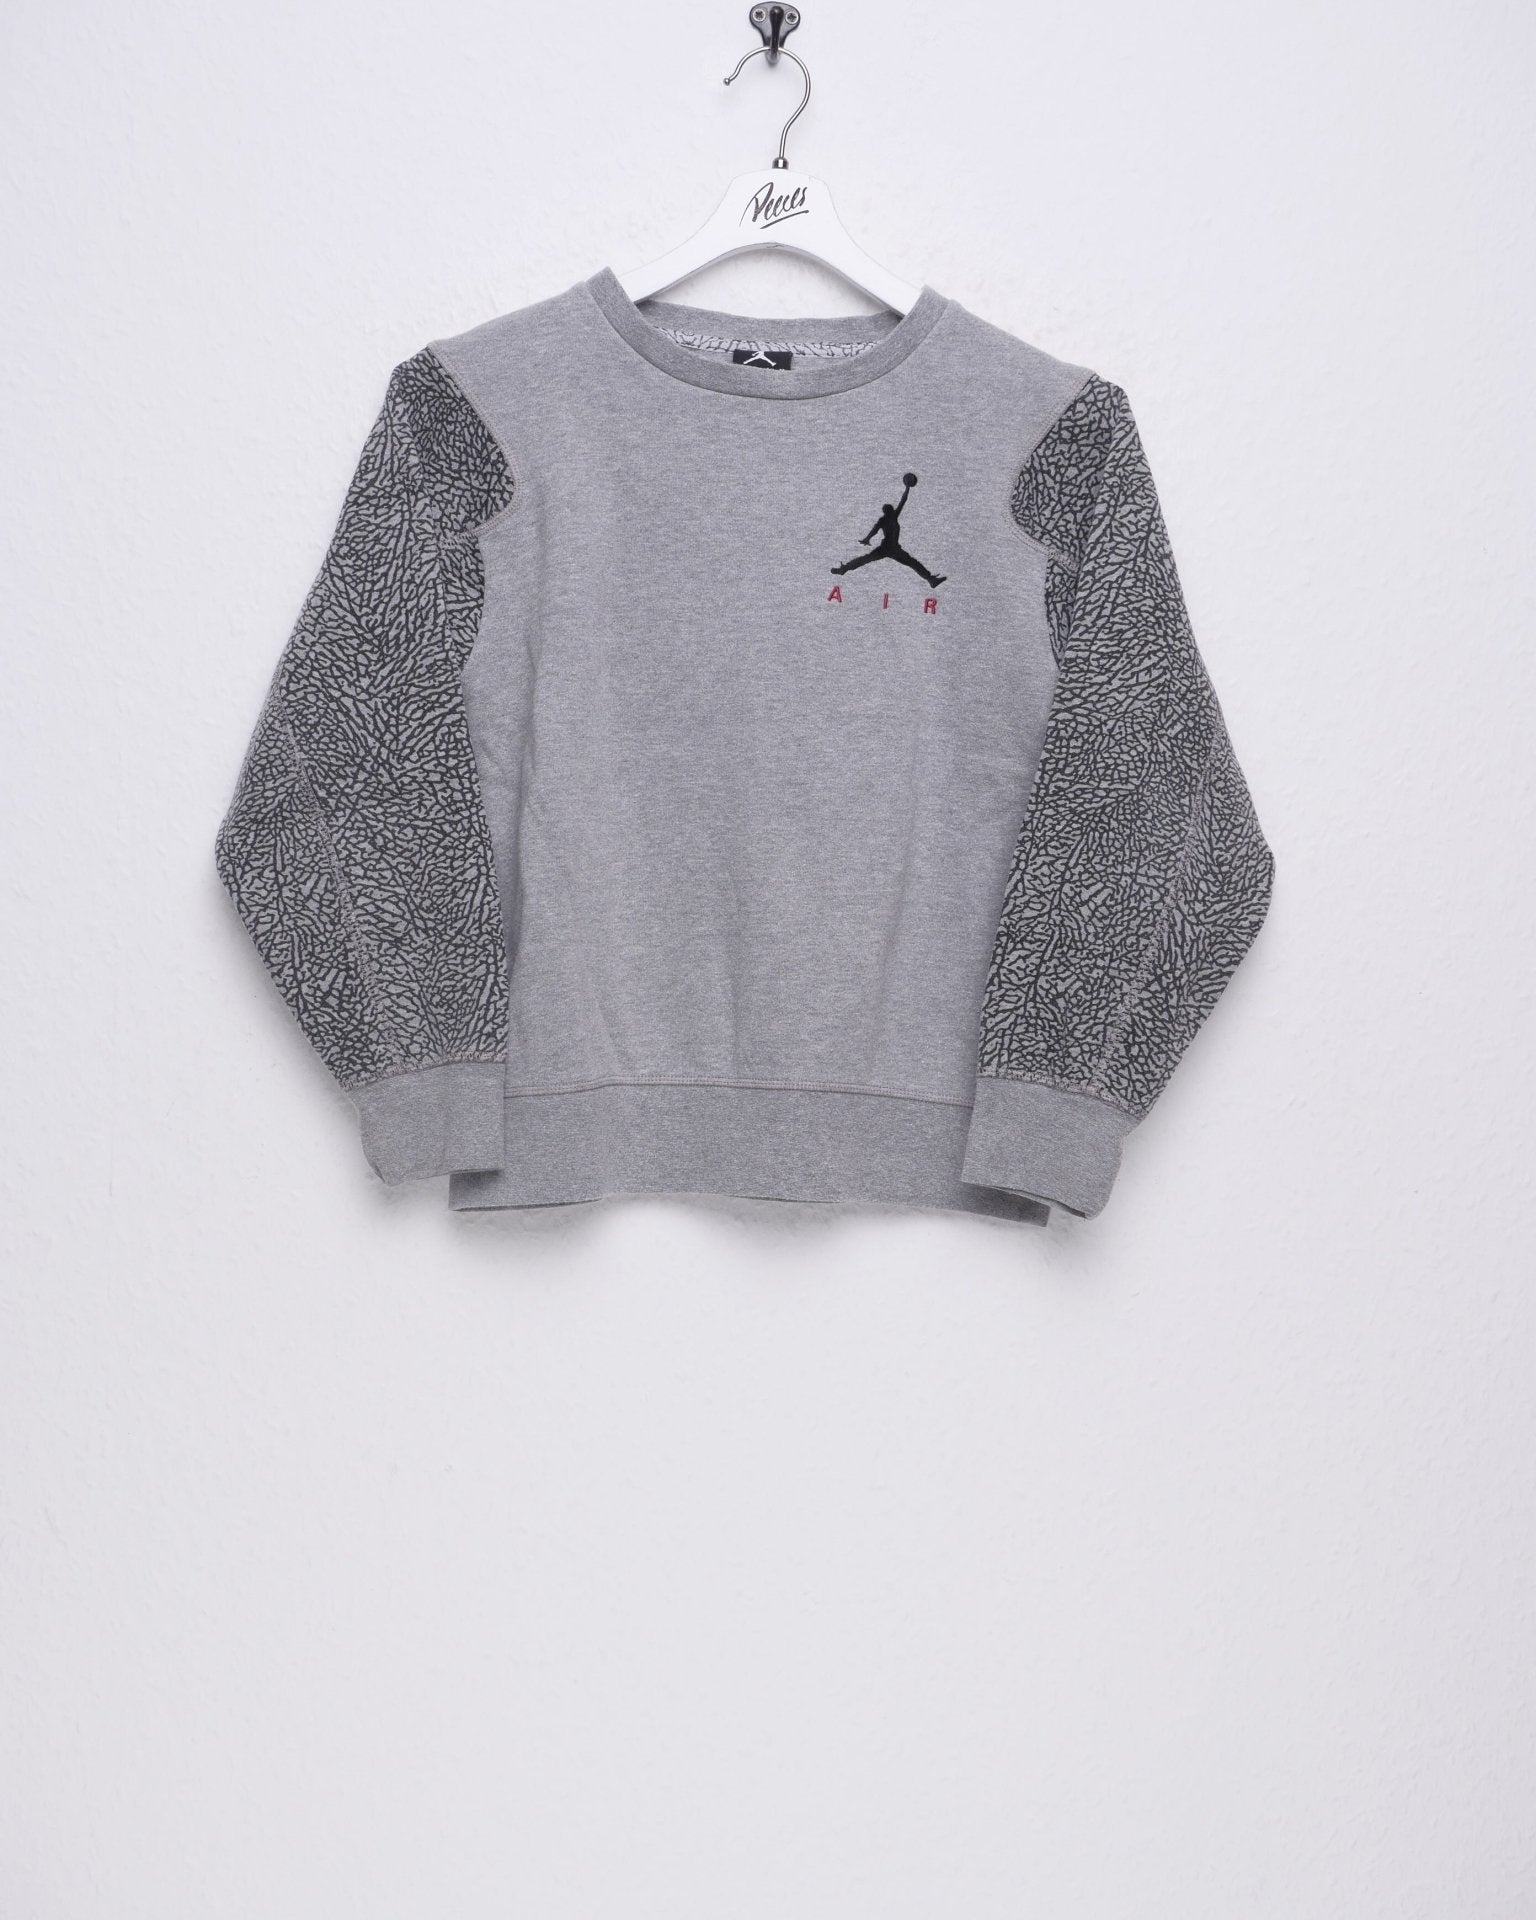 Jordan embroidered Logo grey Sweater - Peeces